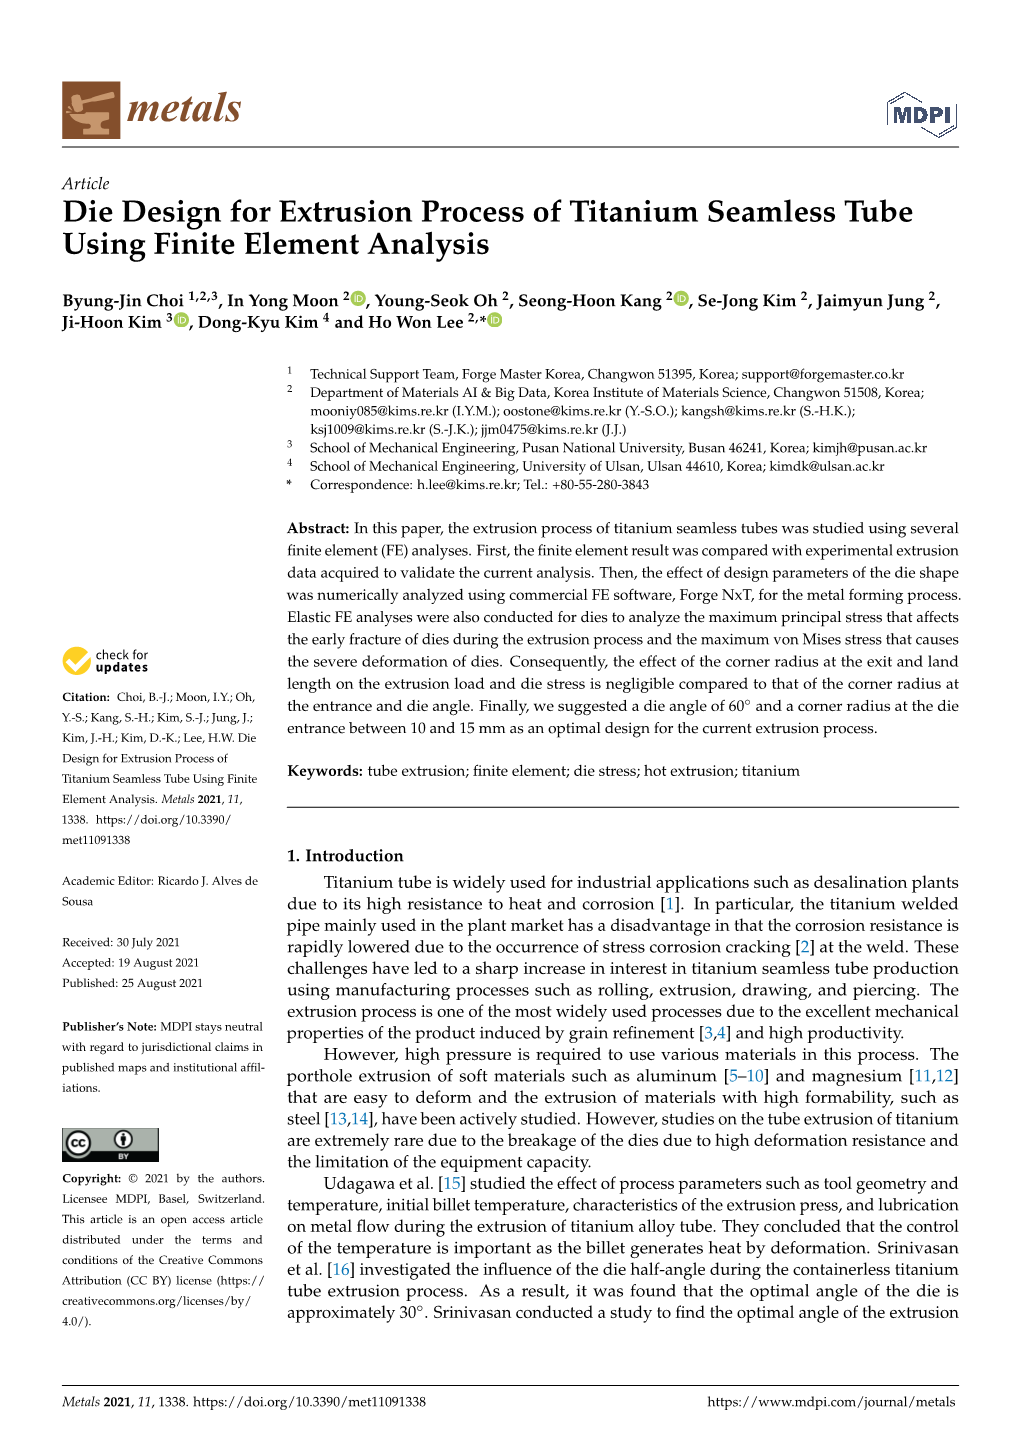 Die Design for Extrusion Process of Titanium Seamless Tube Using Finite Element Analysis